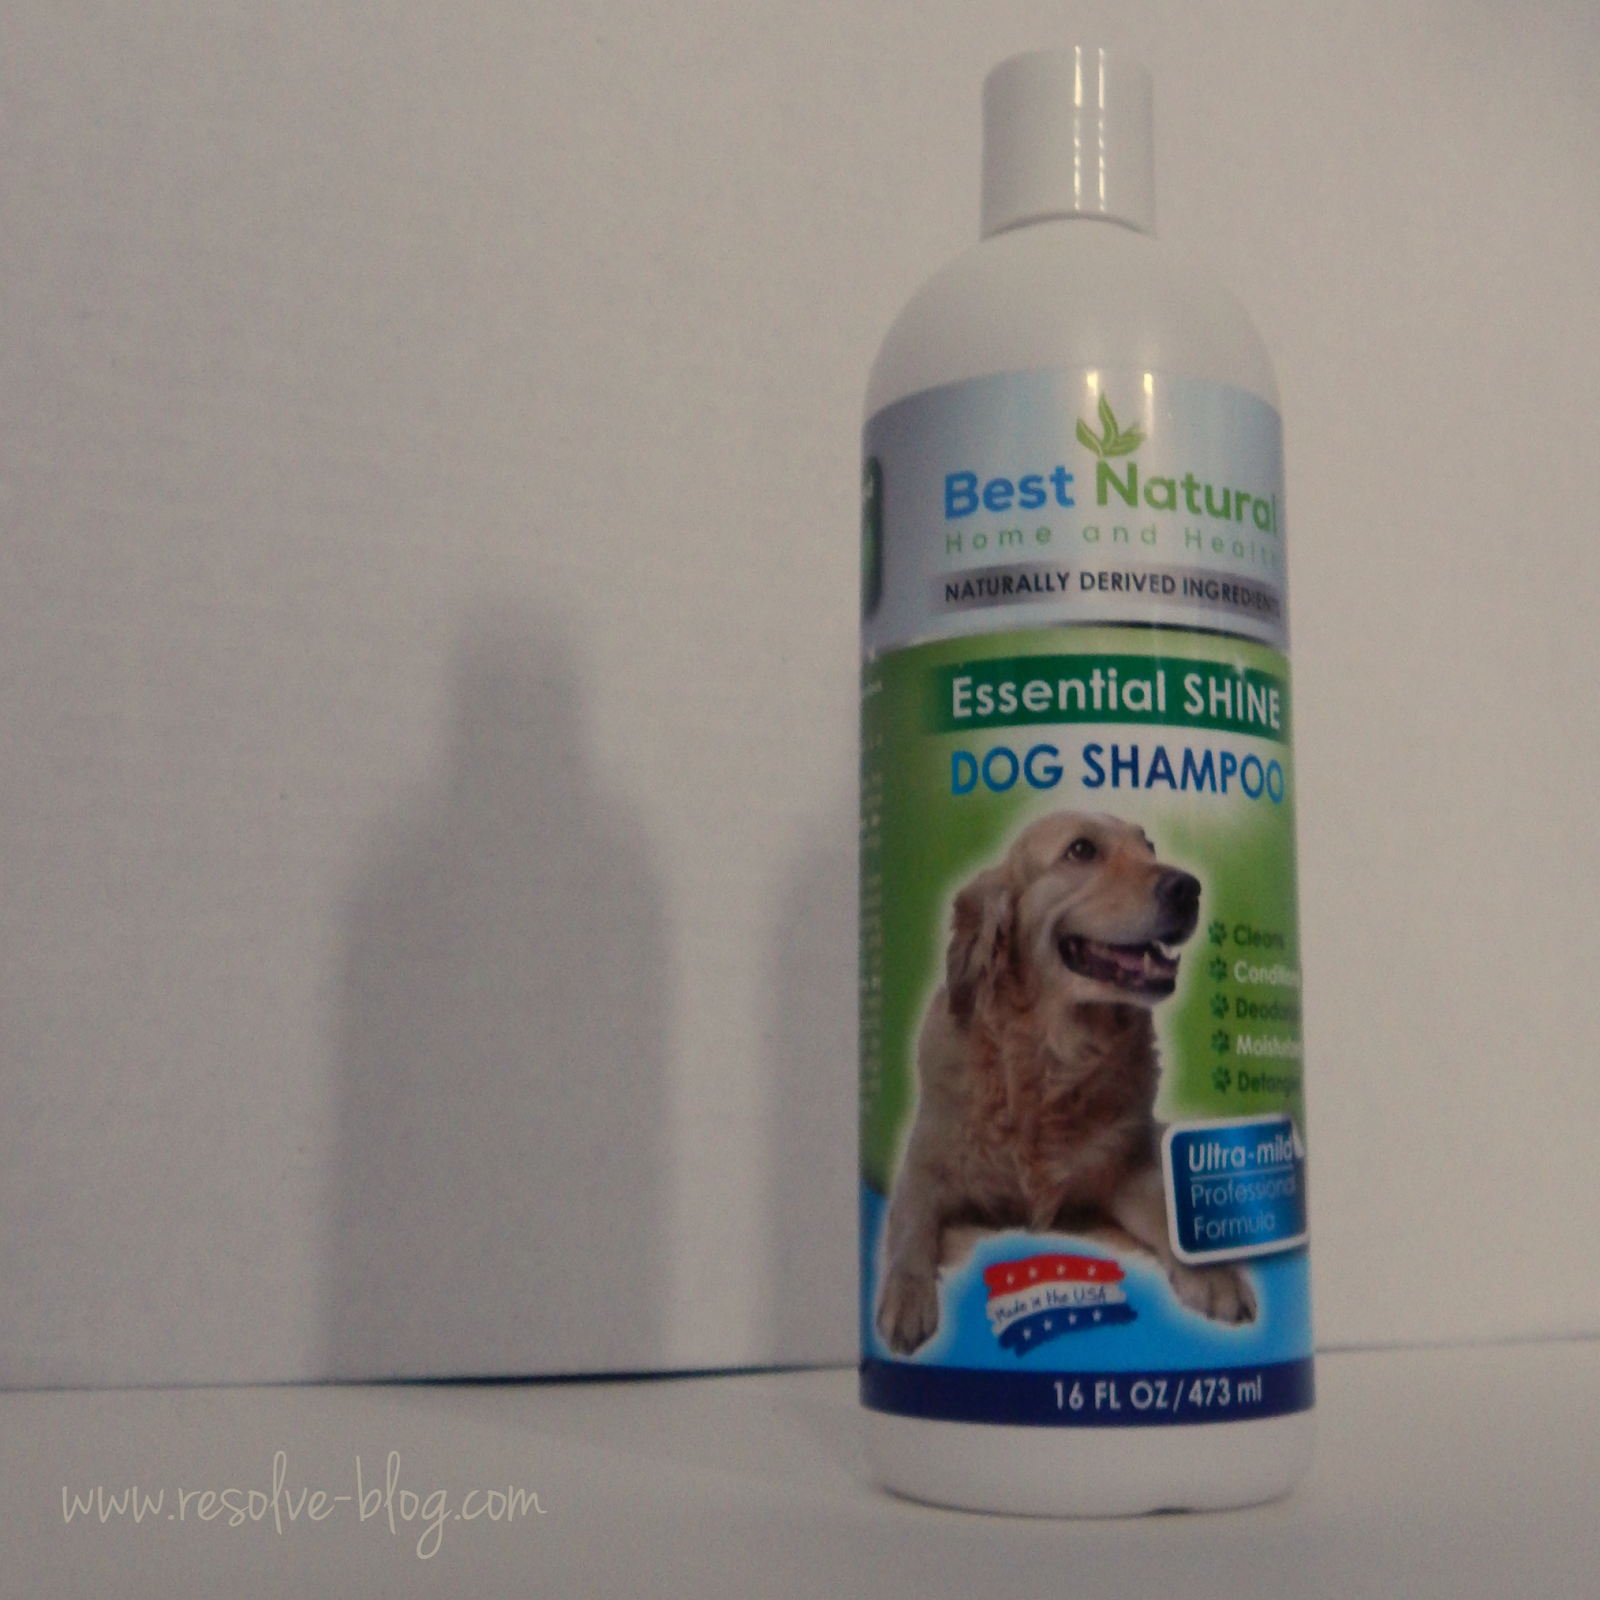 best natural home and health essential shine dog shampoo